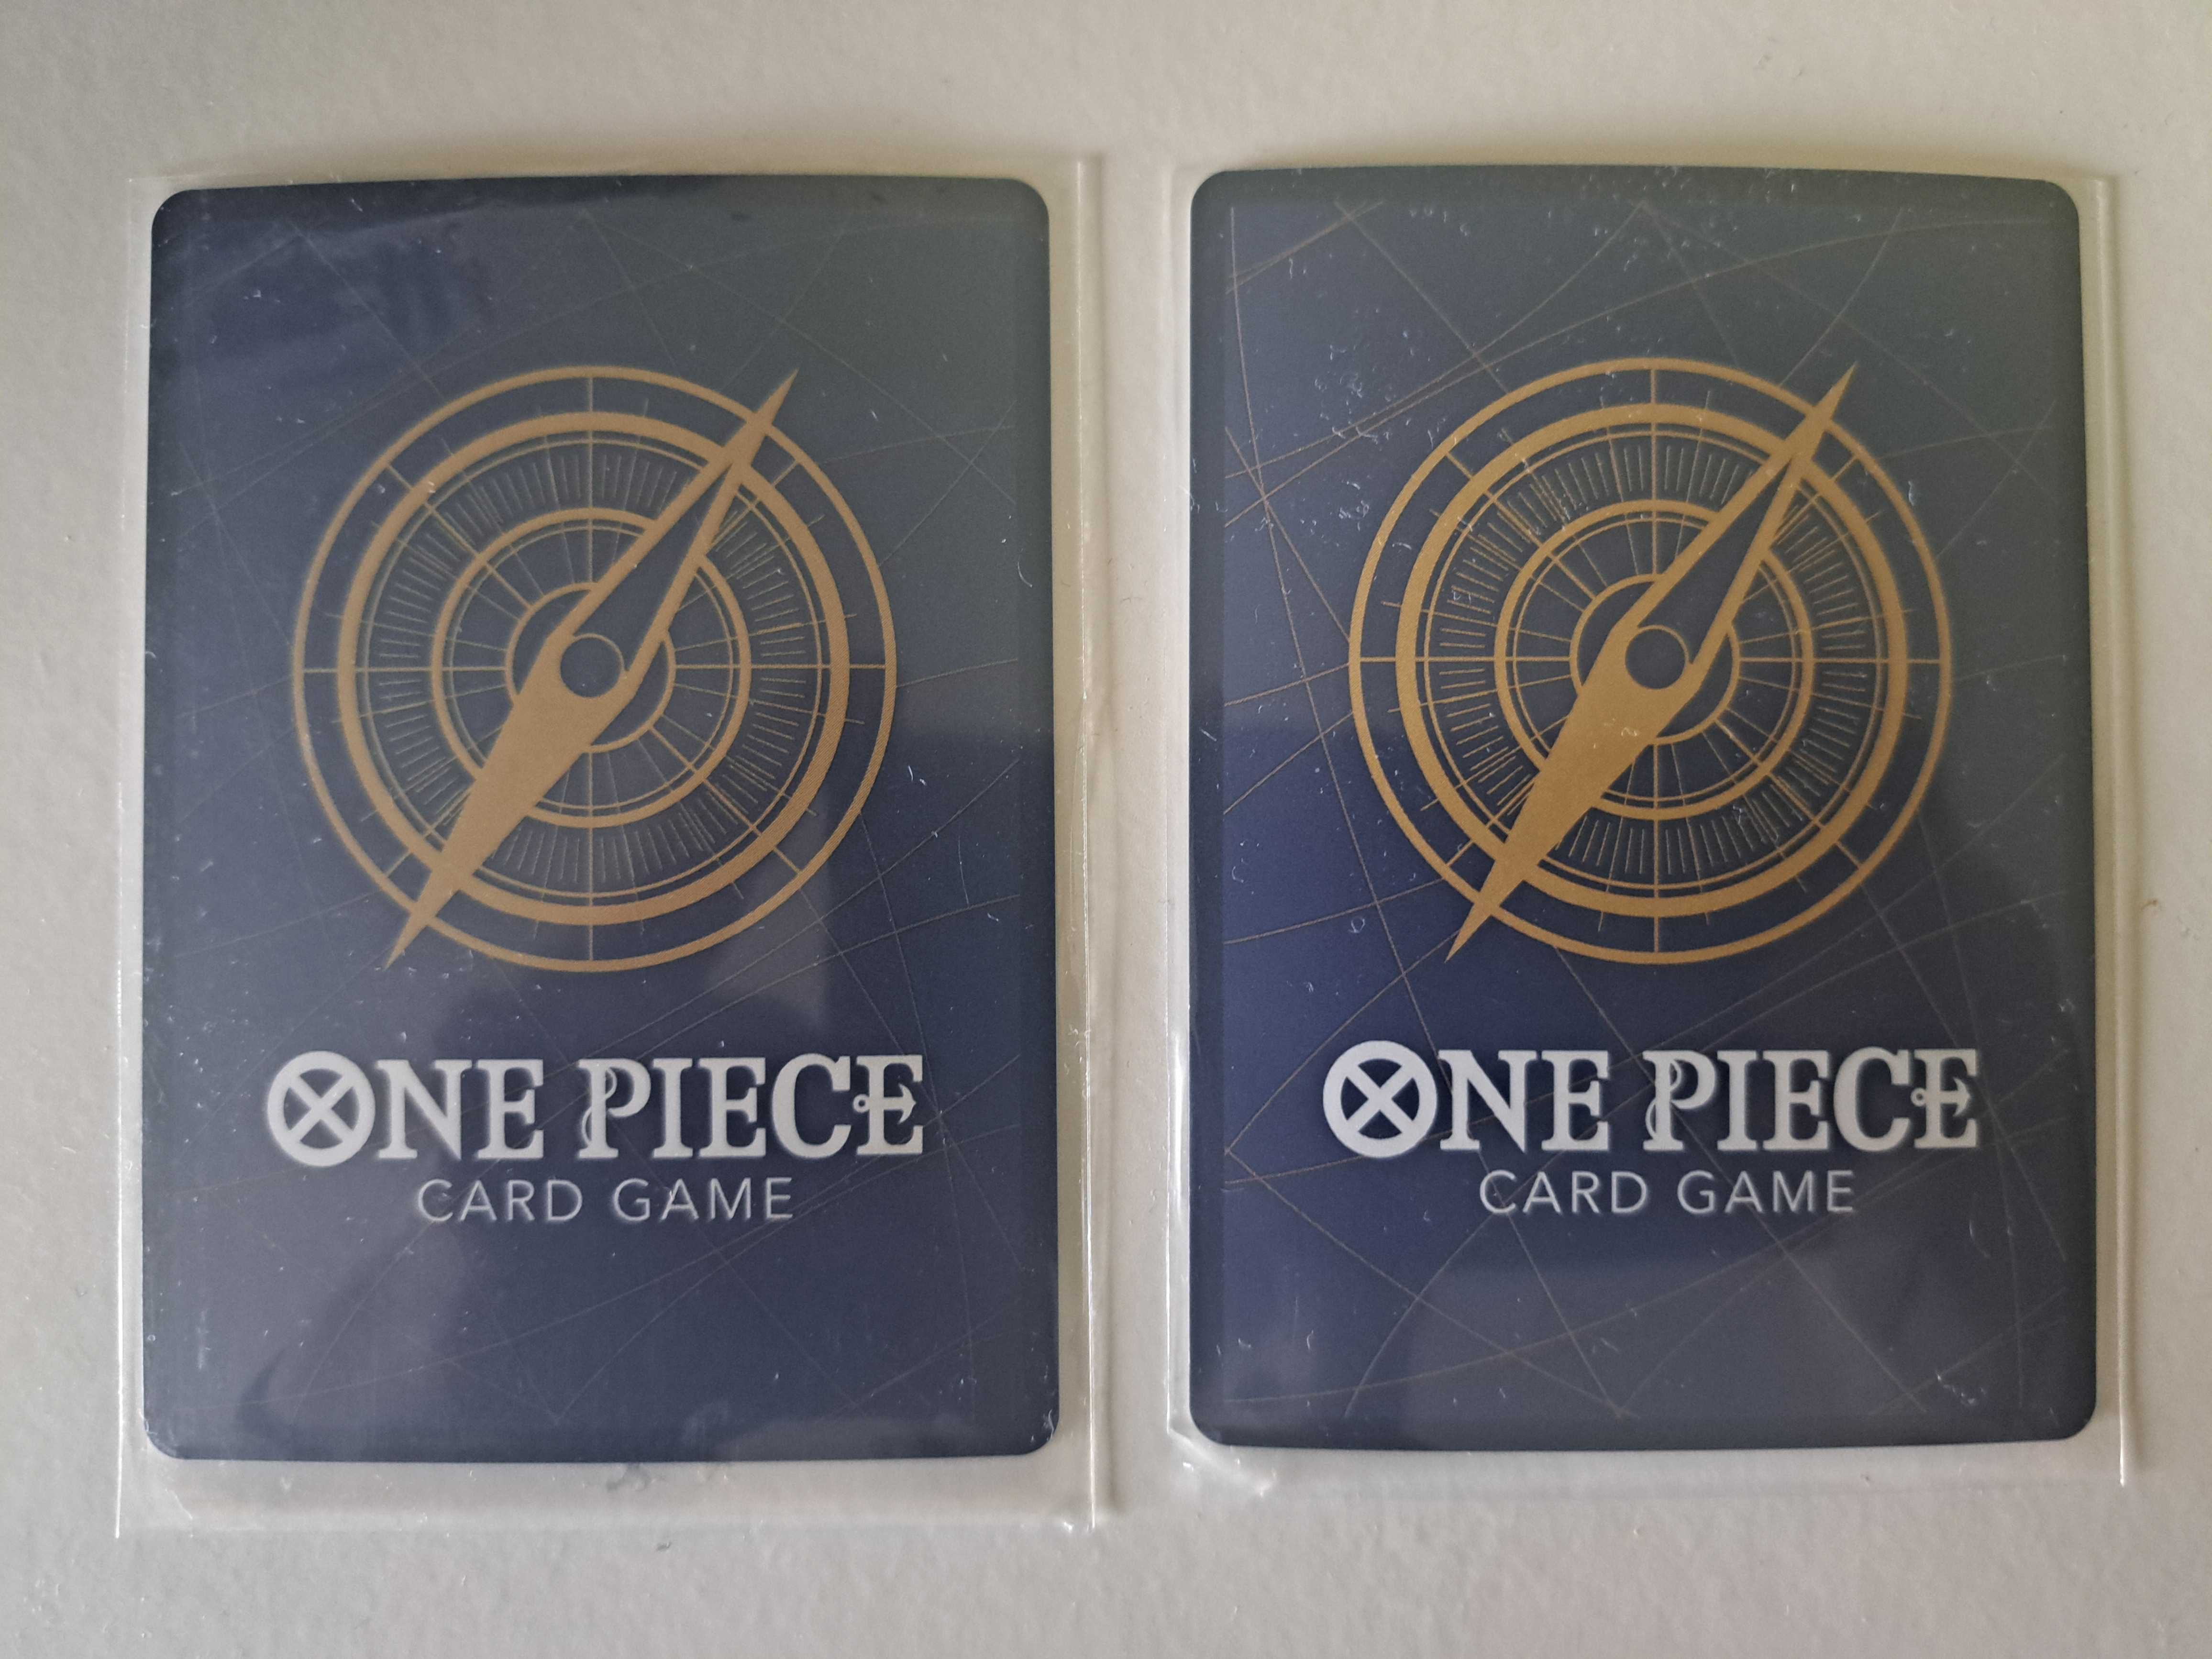 One Piece card game - Kuzan (x2)